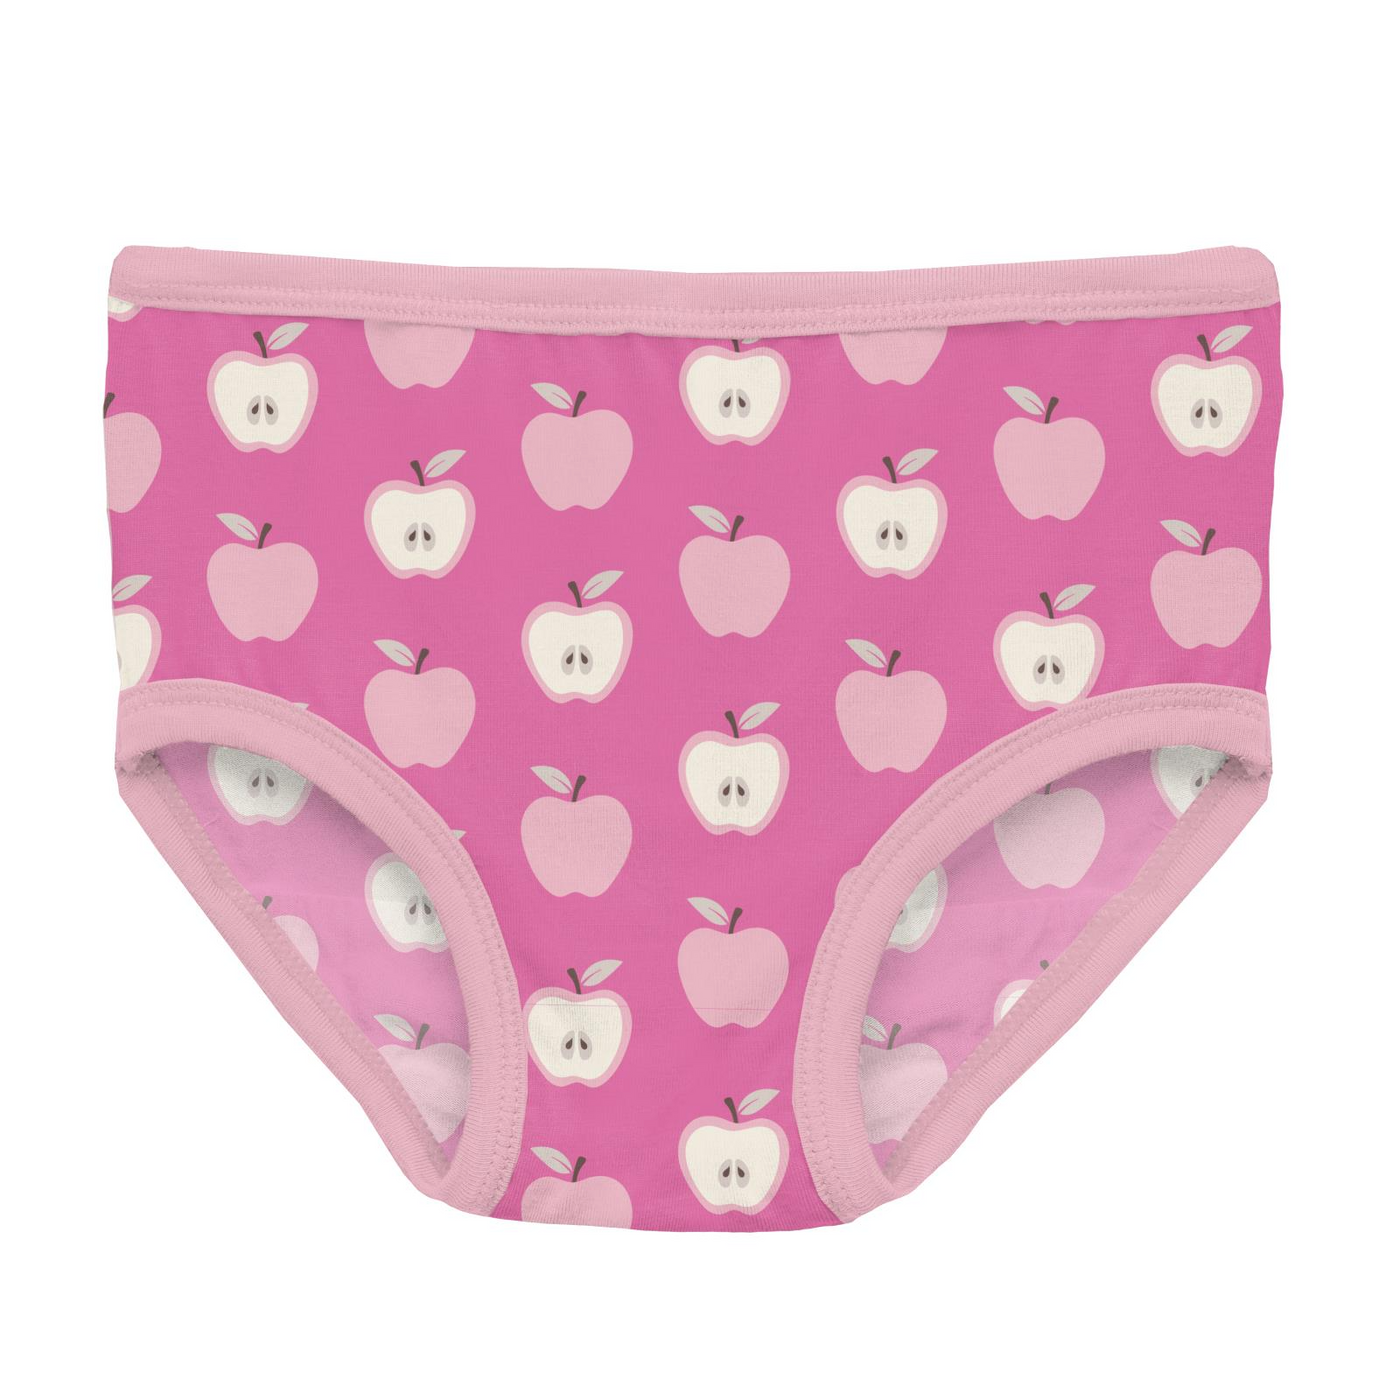 Kickee Pants Girl's Underwear: Tulip Johnny Appleseed